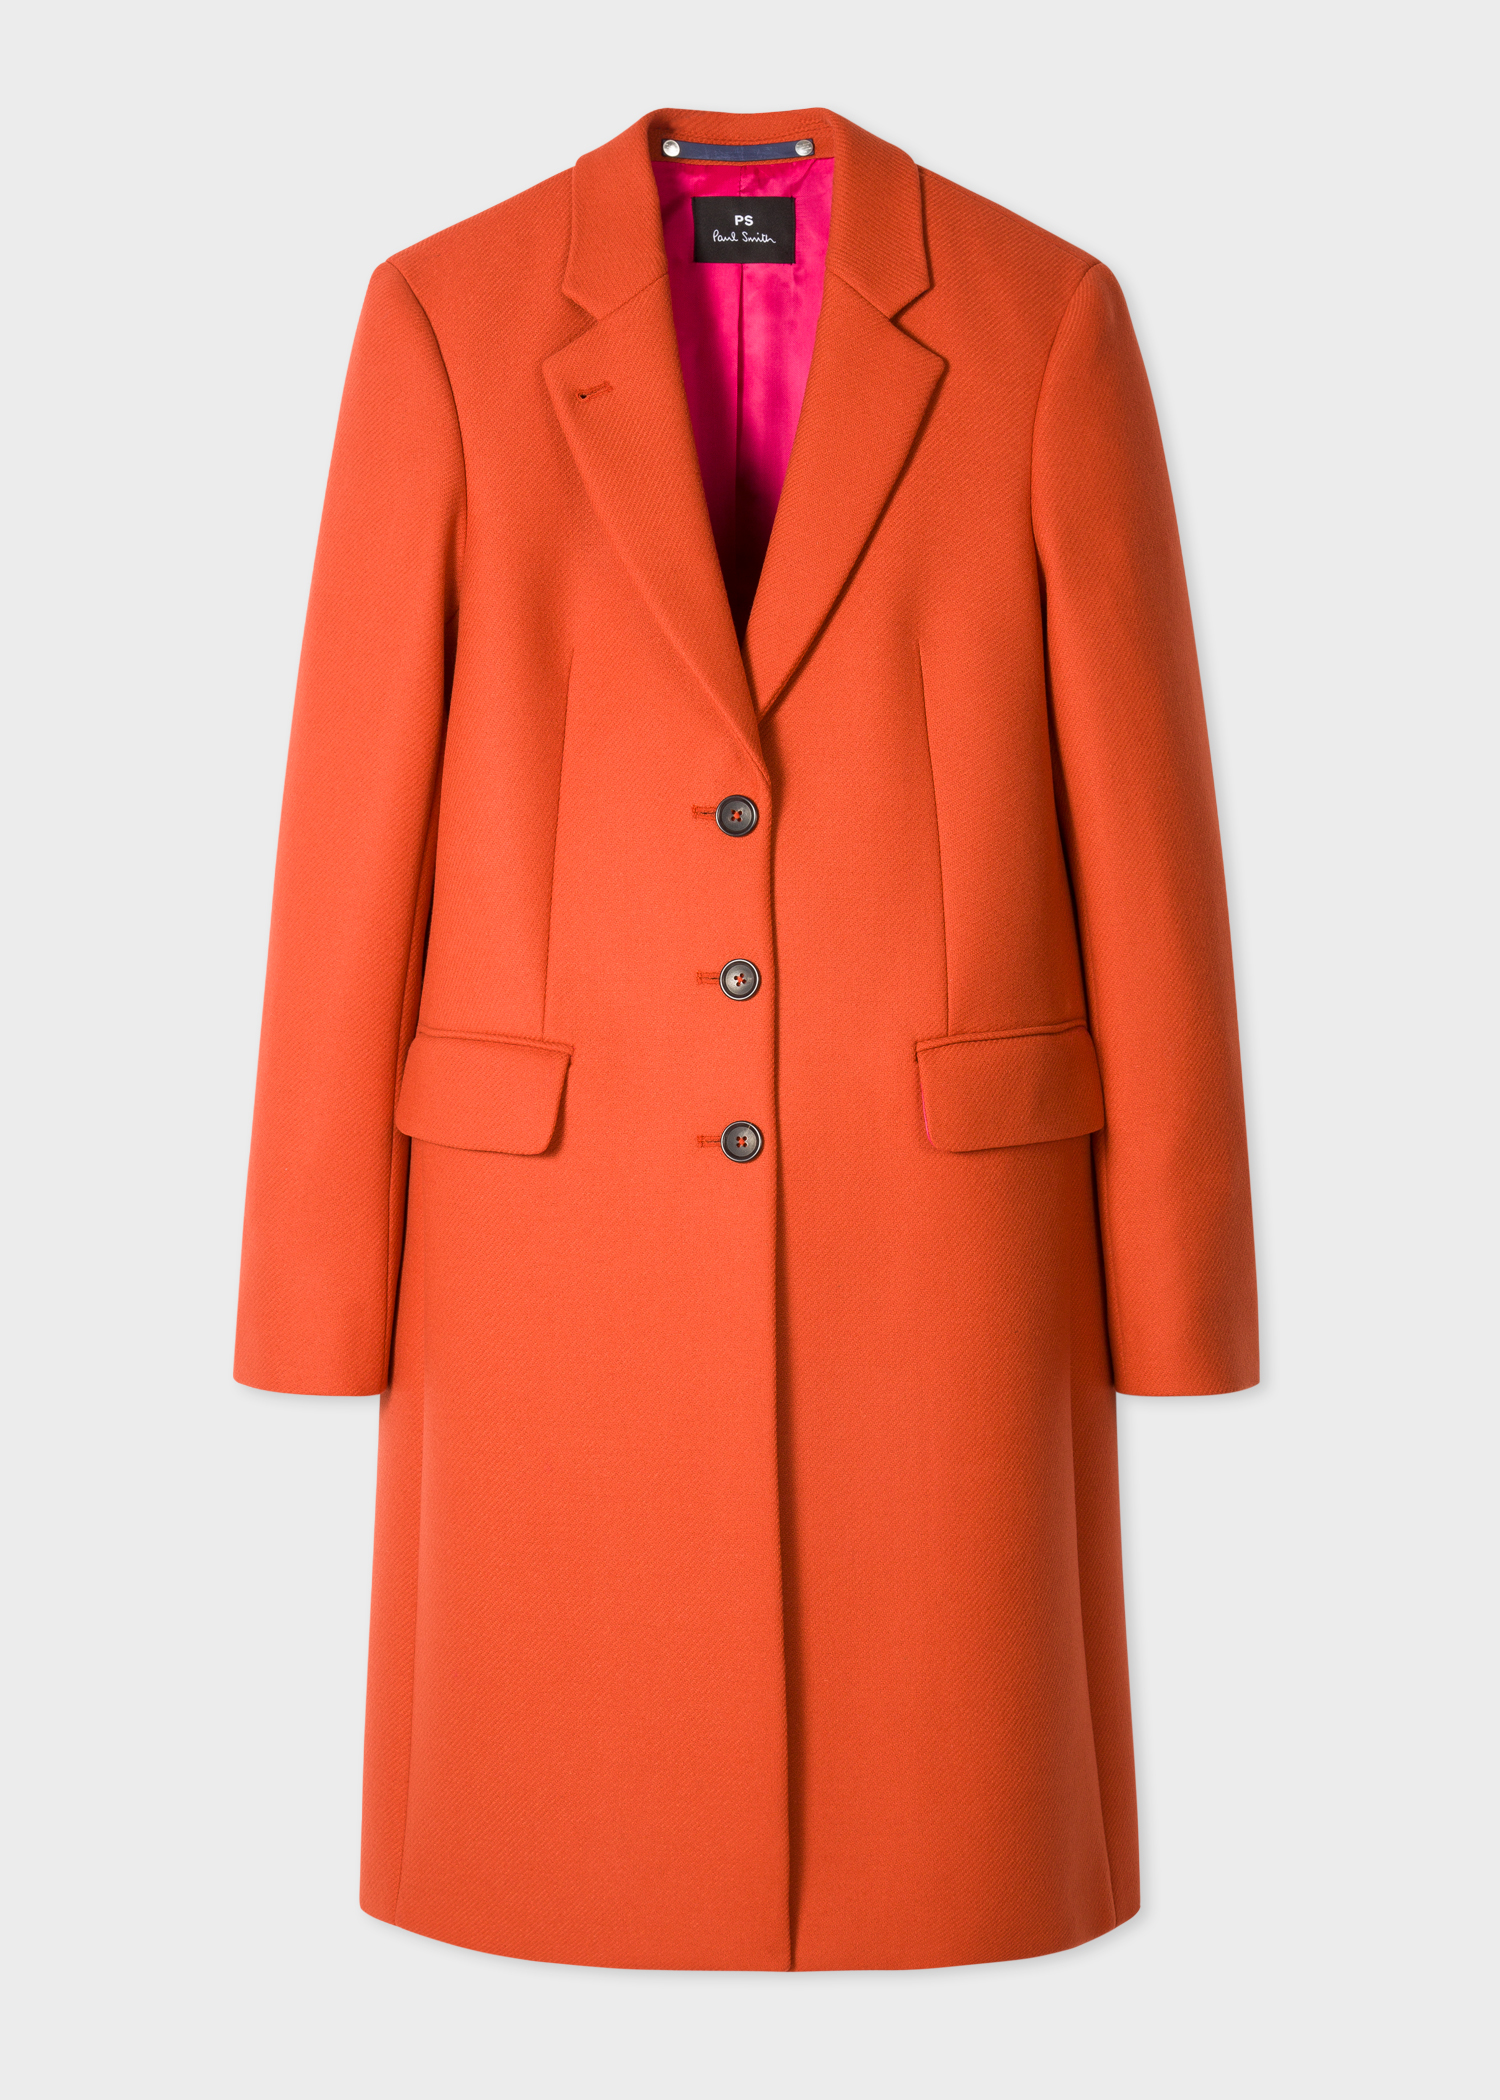 Women's Orange Wool And Cashmere-Blend Three-Button Epsom Coat